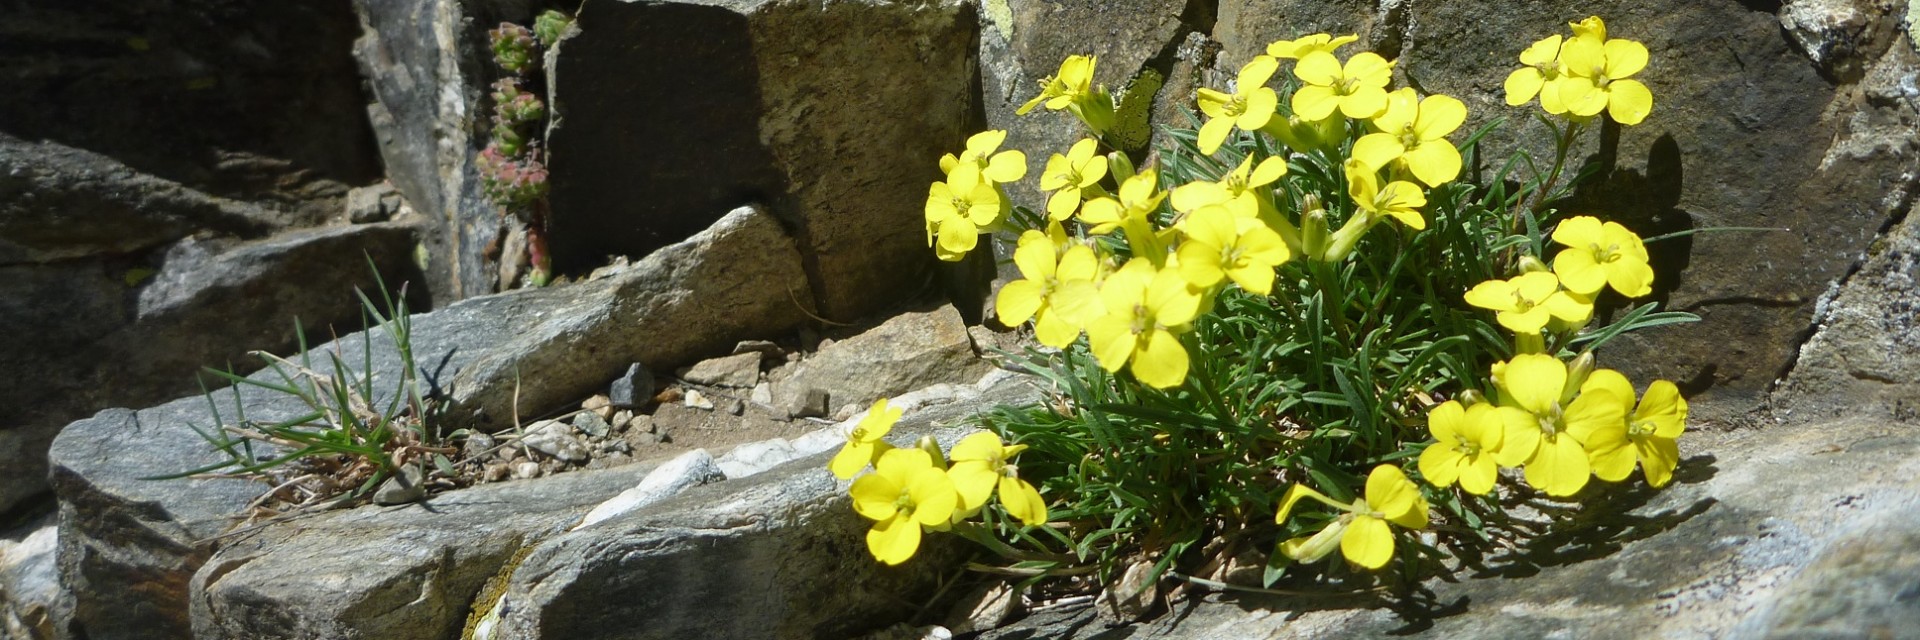 cropped-rocher-fleurs-jaunes.jpg